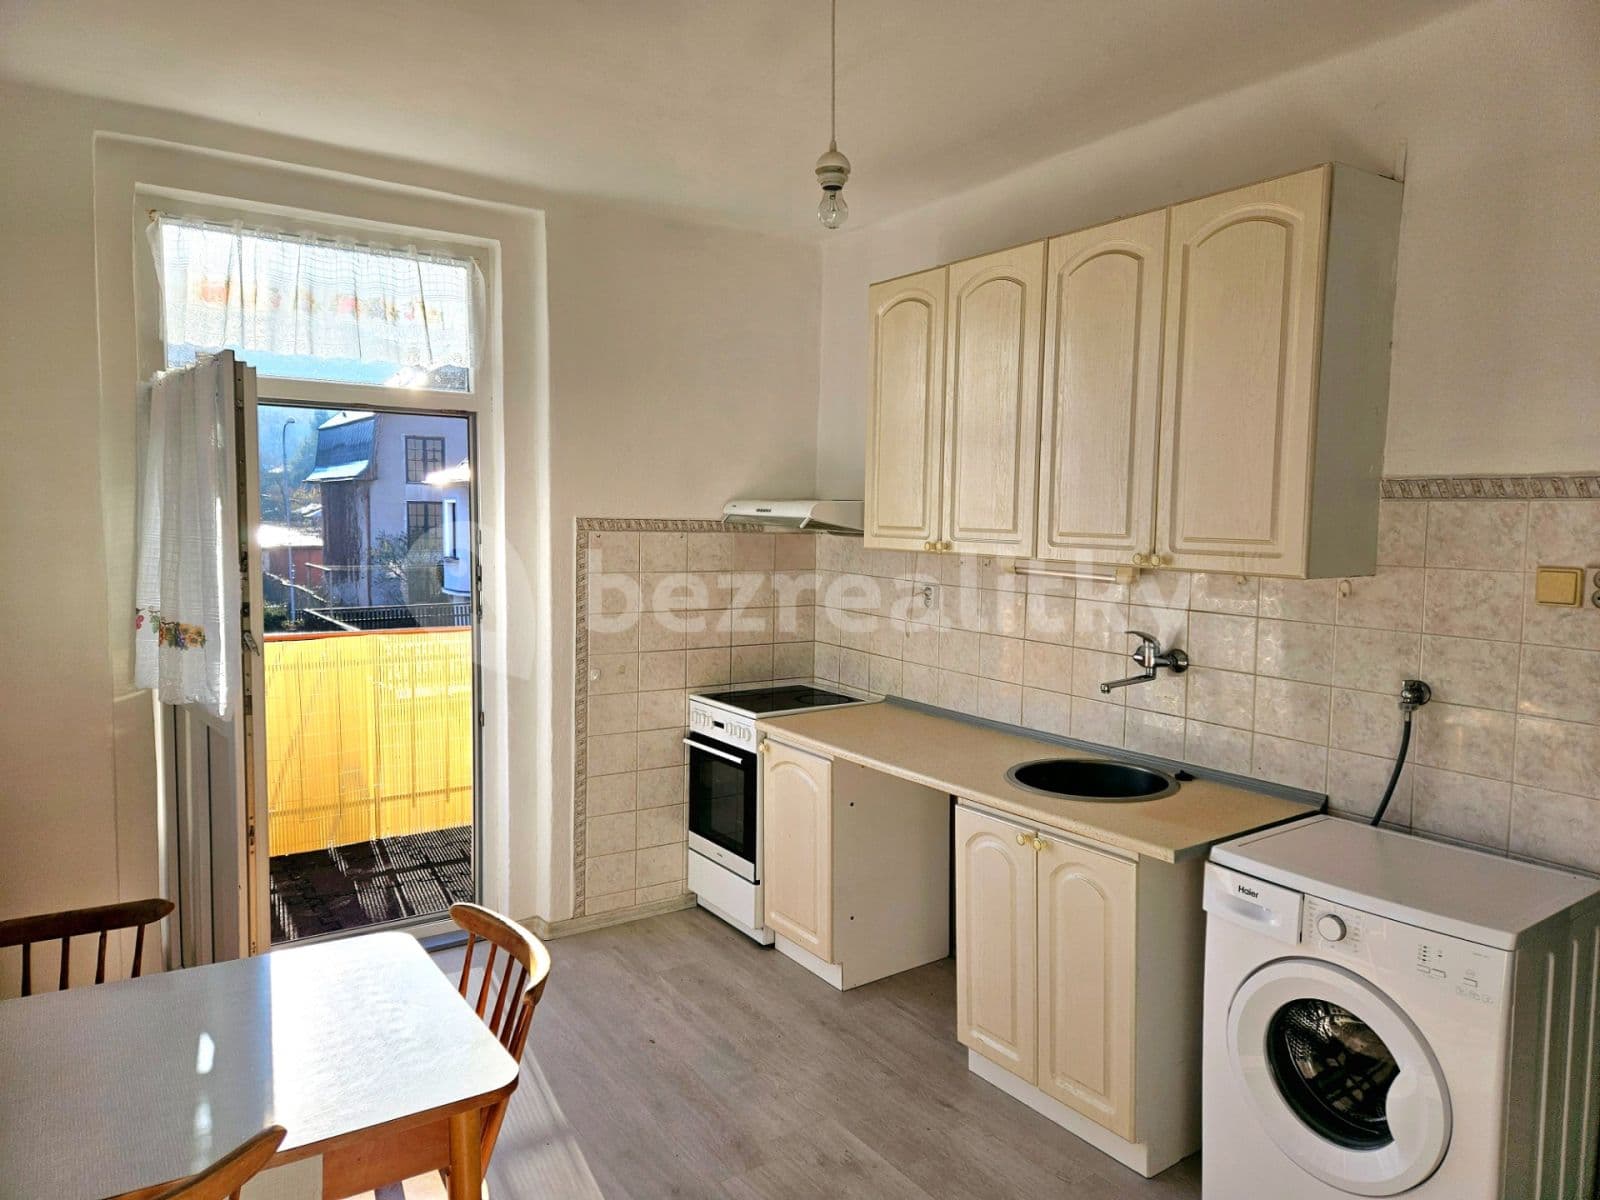 2 bedroom flat to rent, 65 m², Kollárova, Karlovy Vary, Karlovarský Region